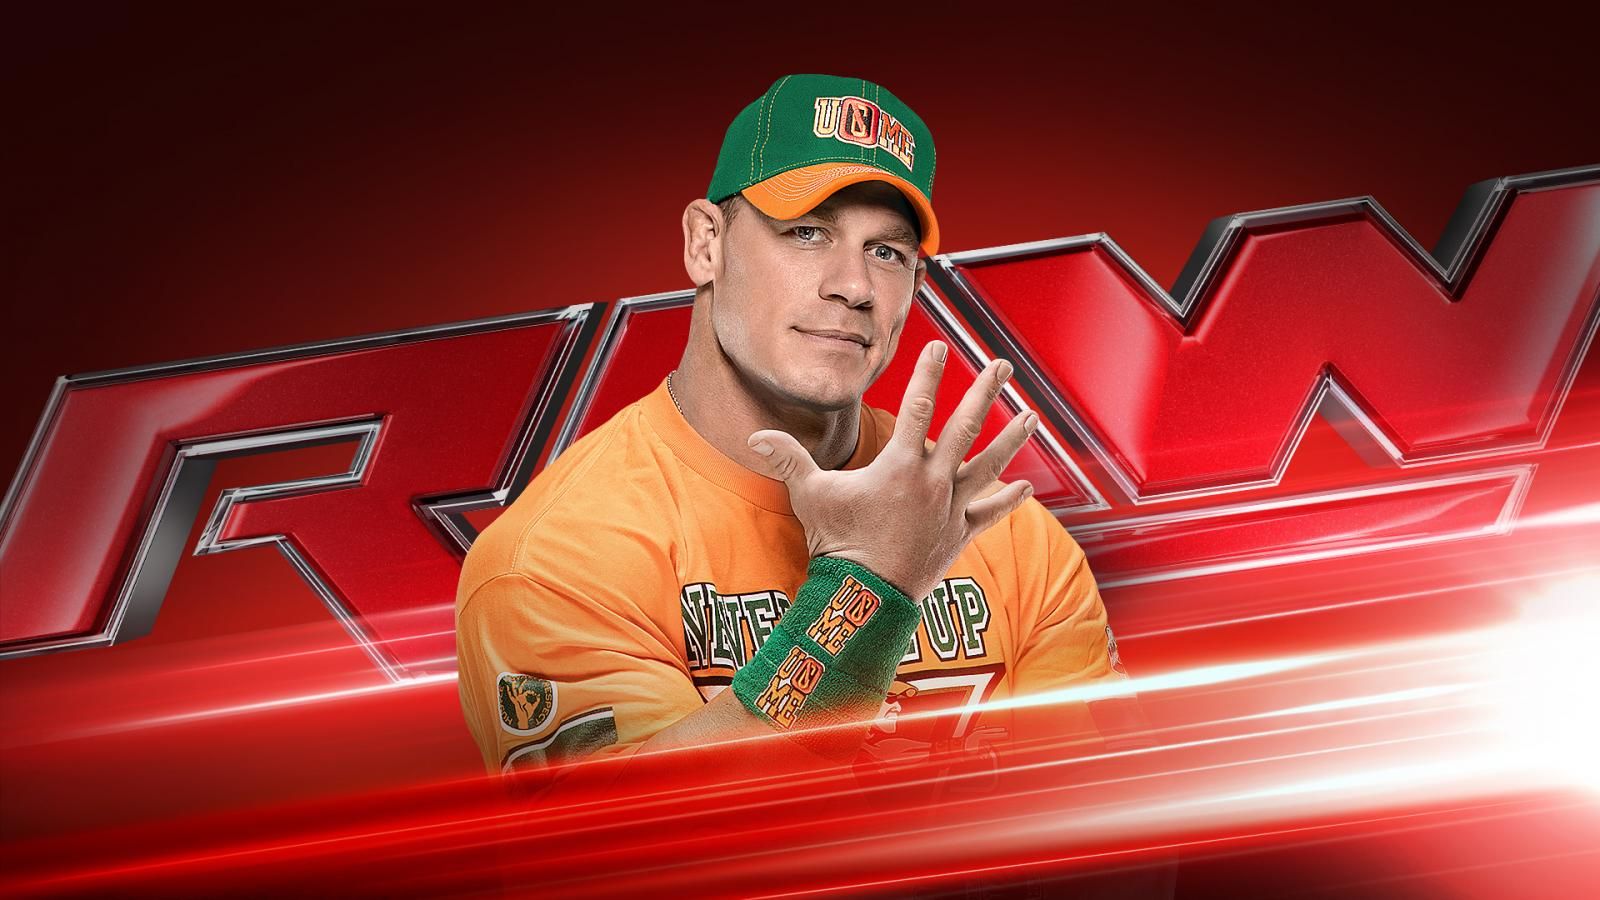 Nice Images Collection - Wwe John Cena Return Raw - HD Wallpaper 